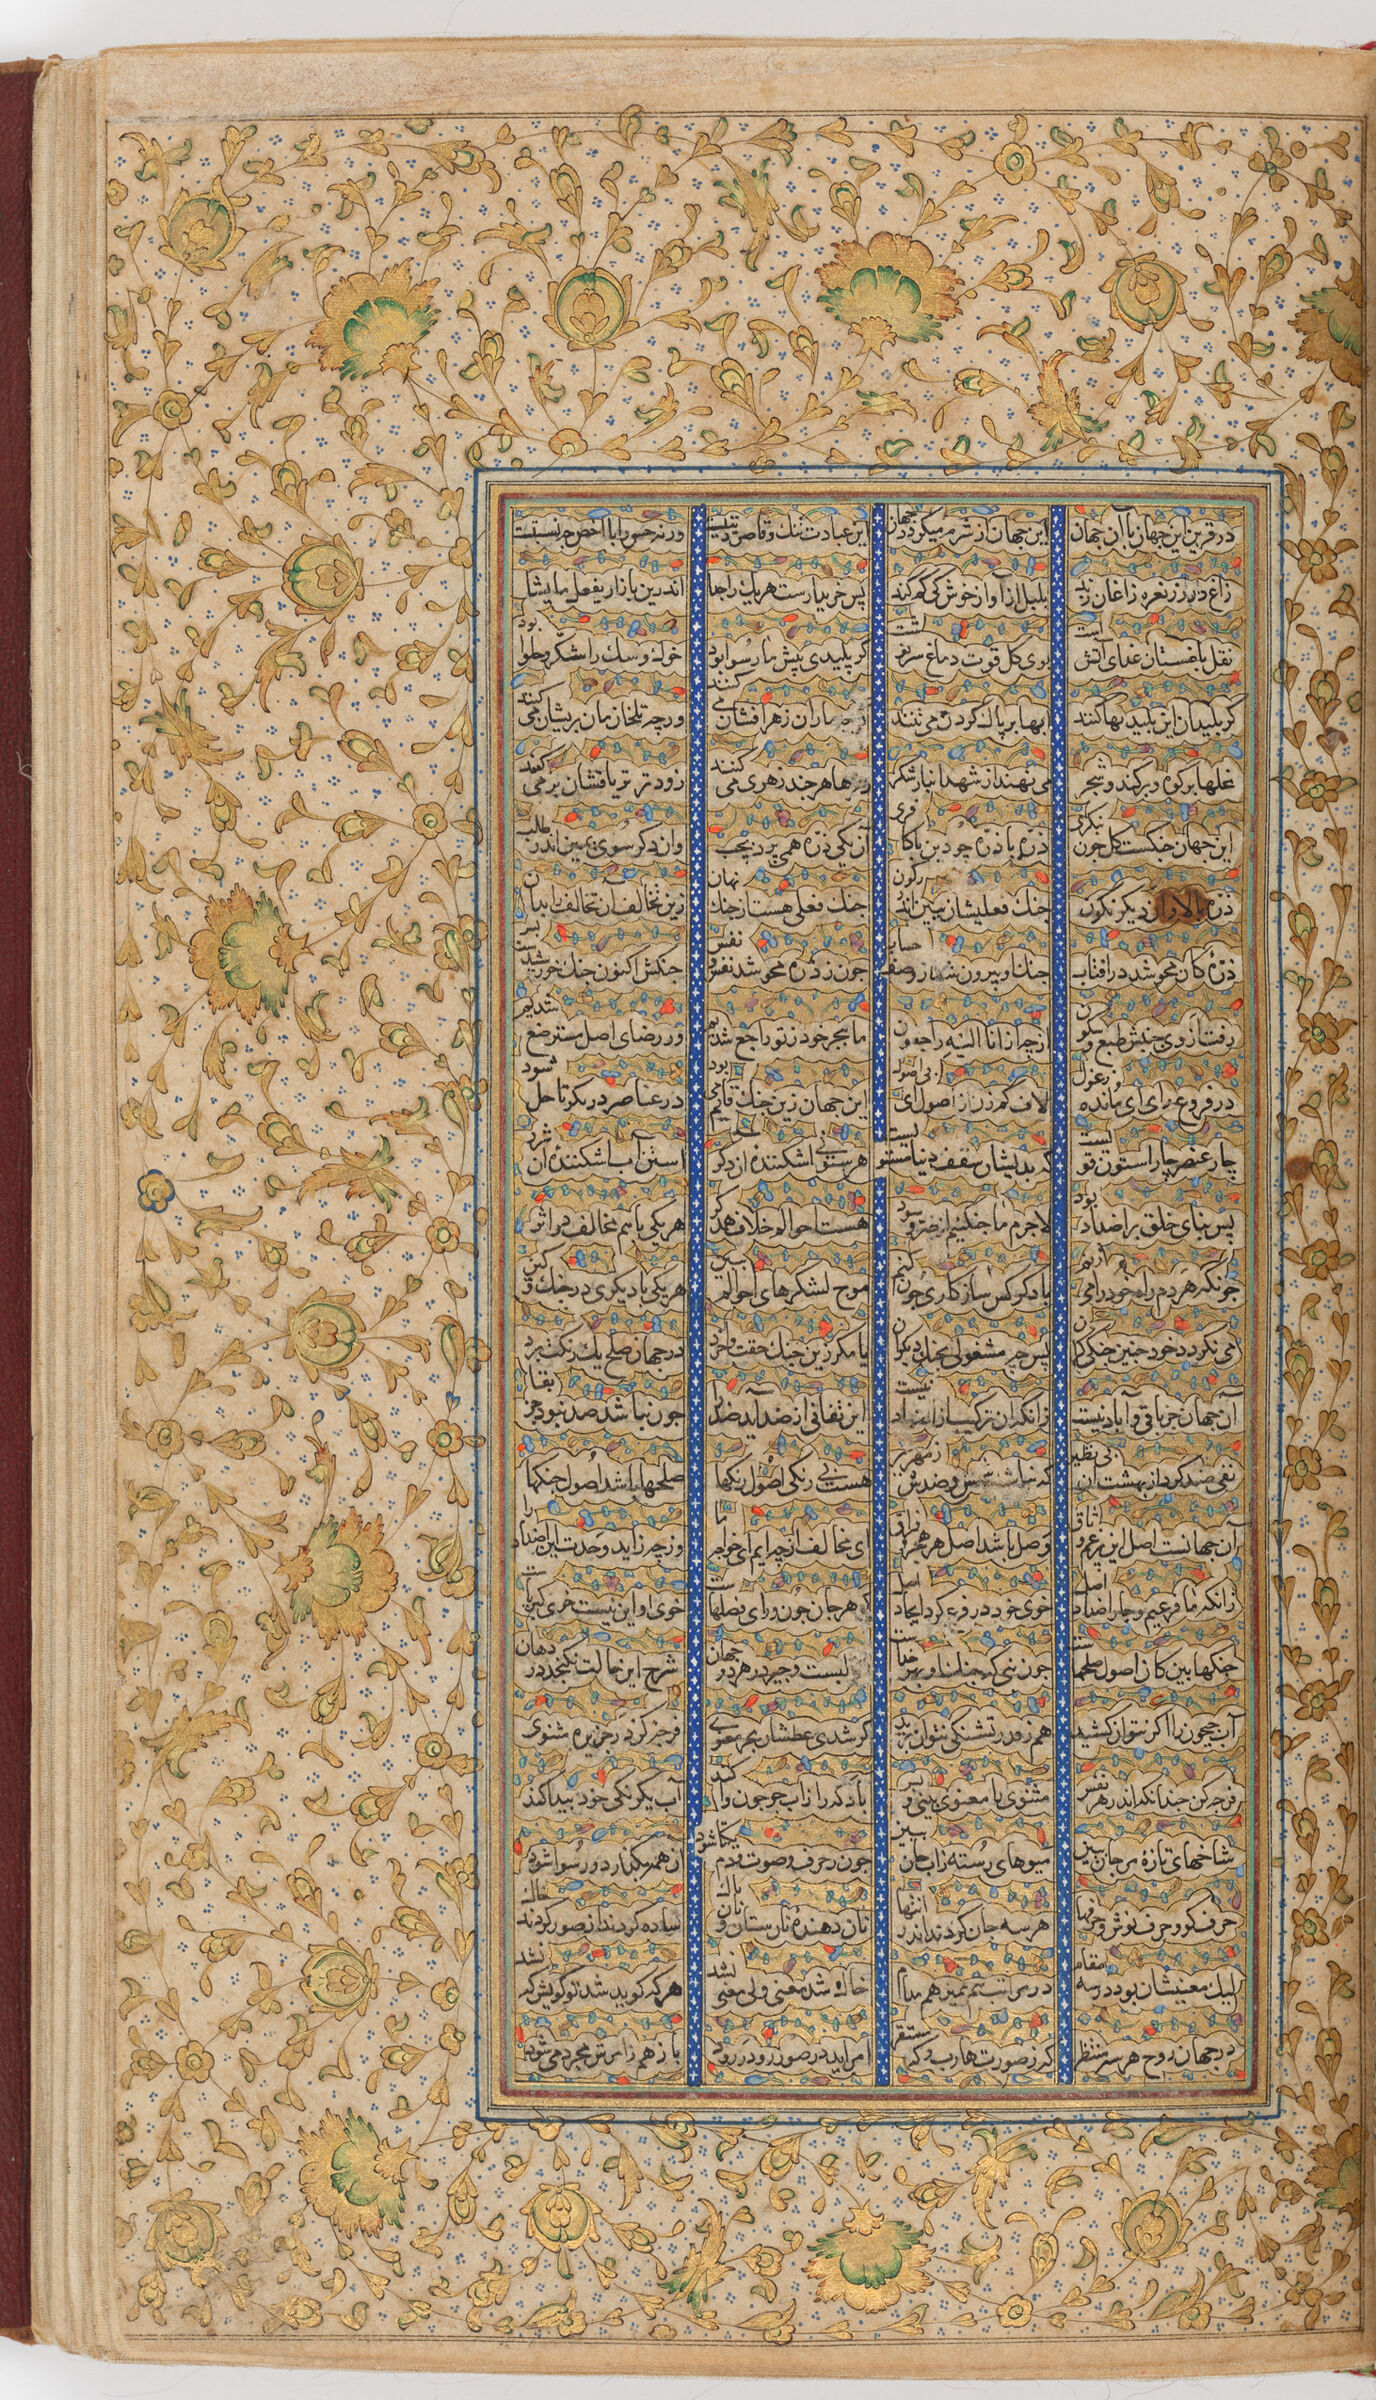 Illuminated Margin And Interlinear Gilt Text Folio (Illumination And Gilt Recto; Text Verso Of Folio 241), From A Manuscript Of The Mathnavi Ma‘navi By Maulana Jalal Al-Din Rumi